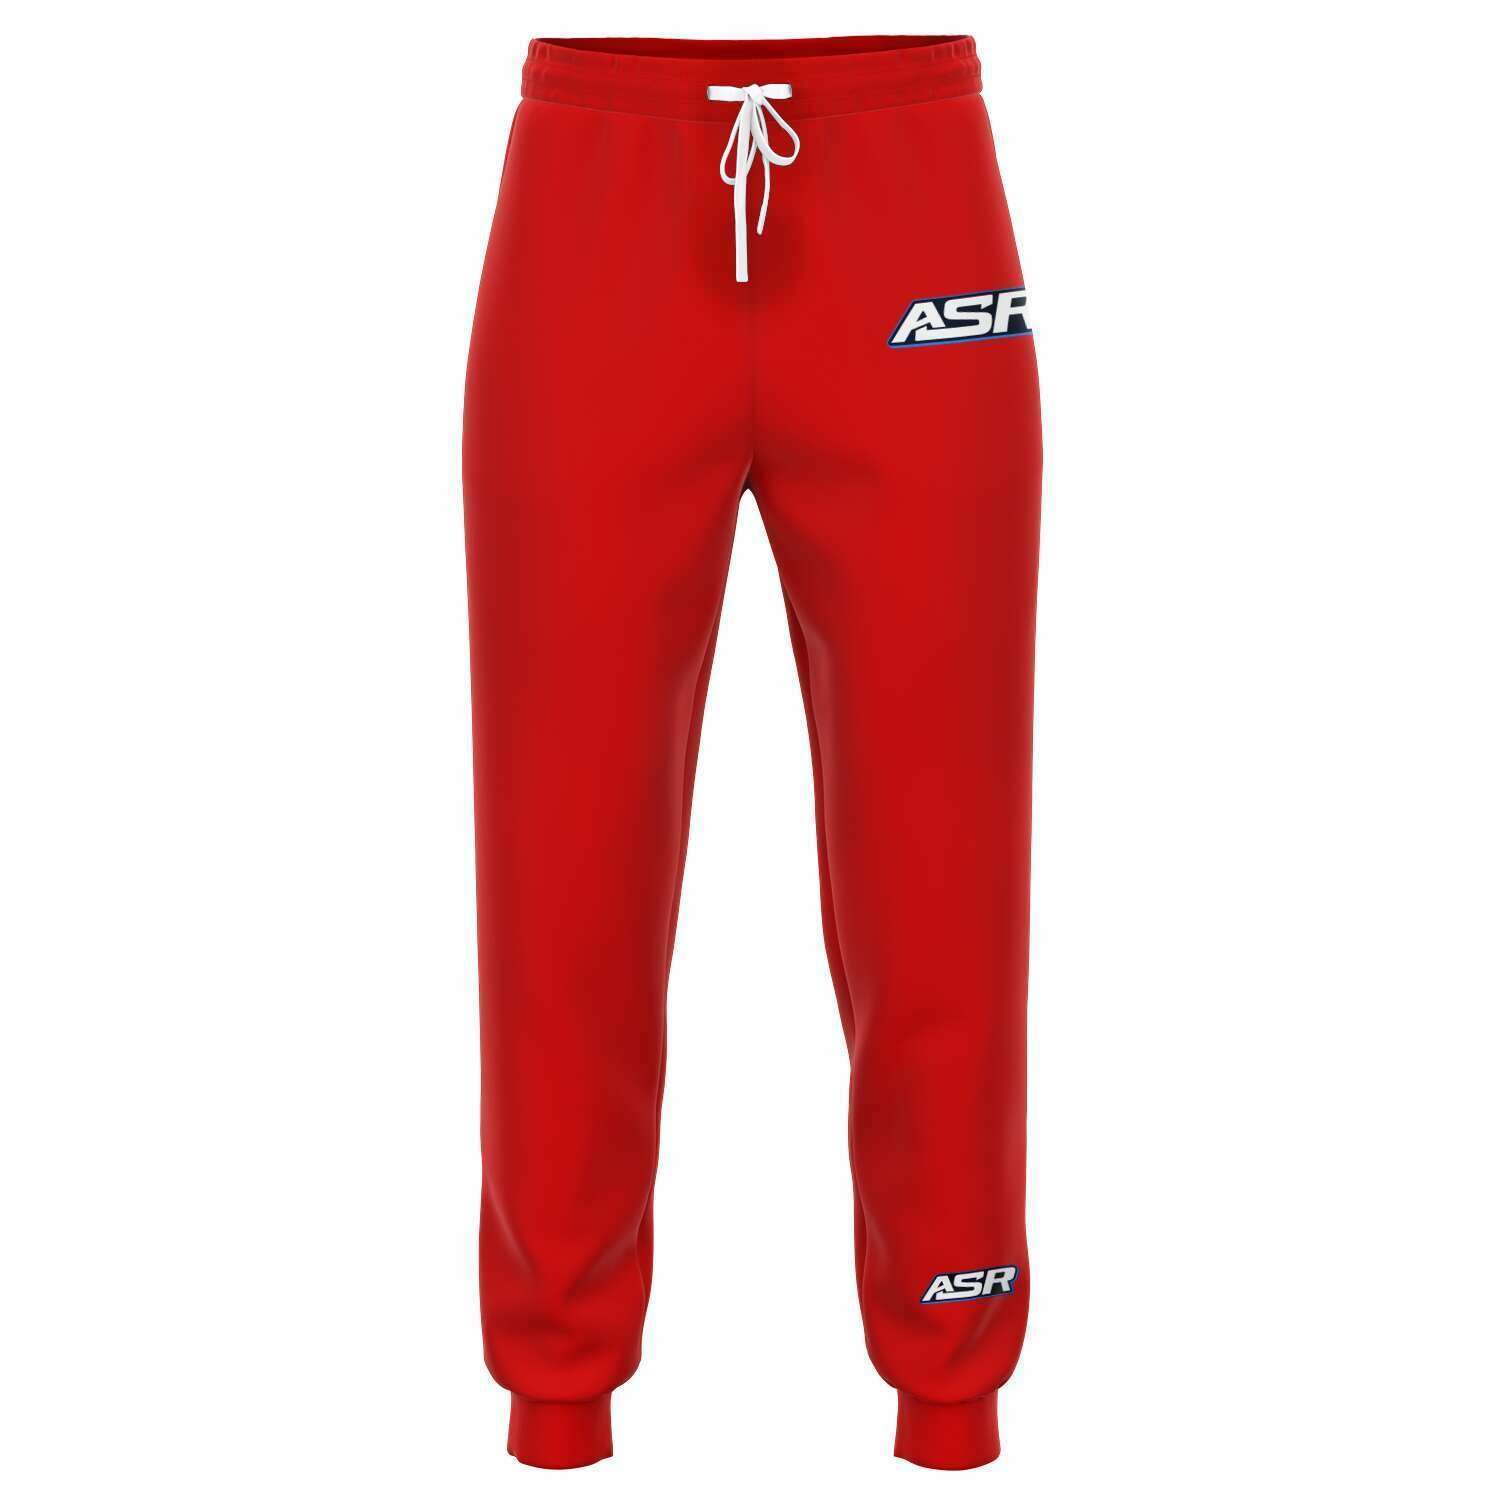 ASR Red Track Pants